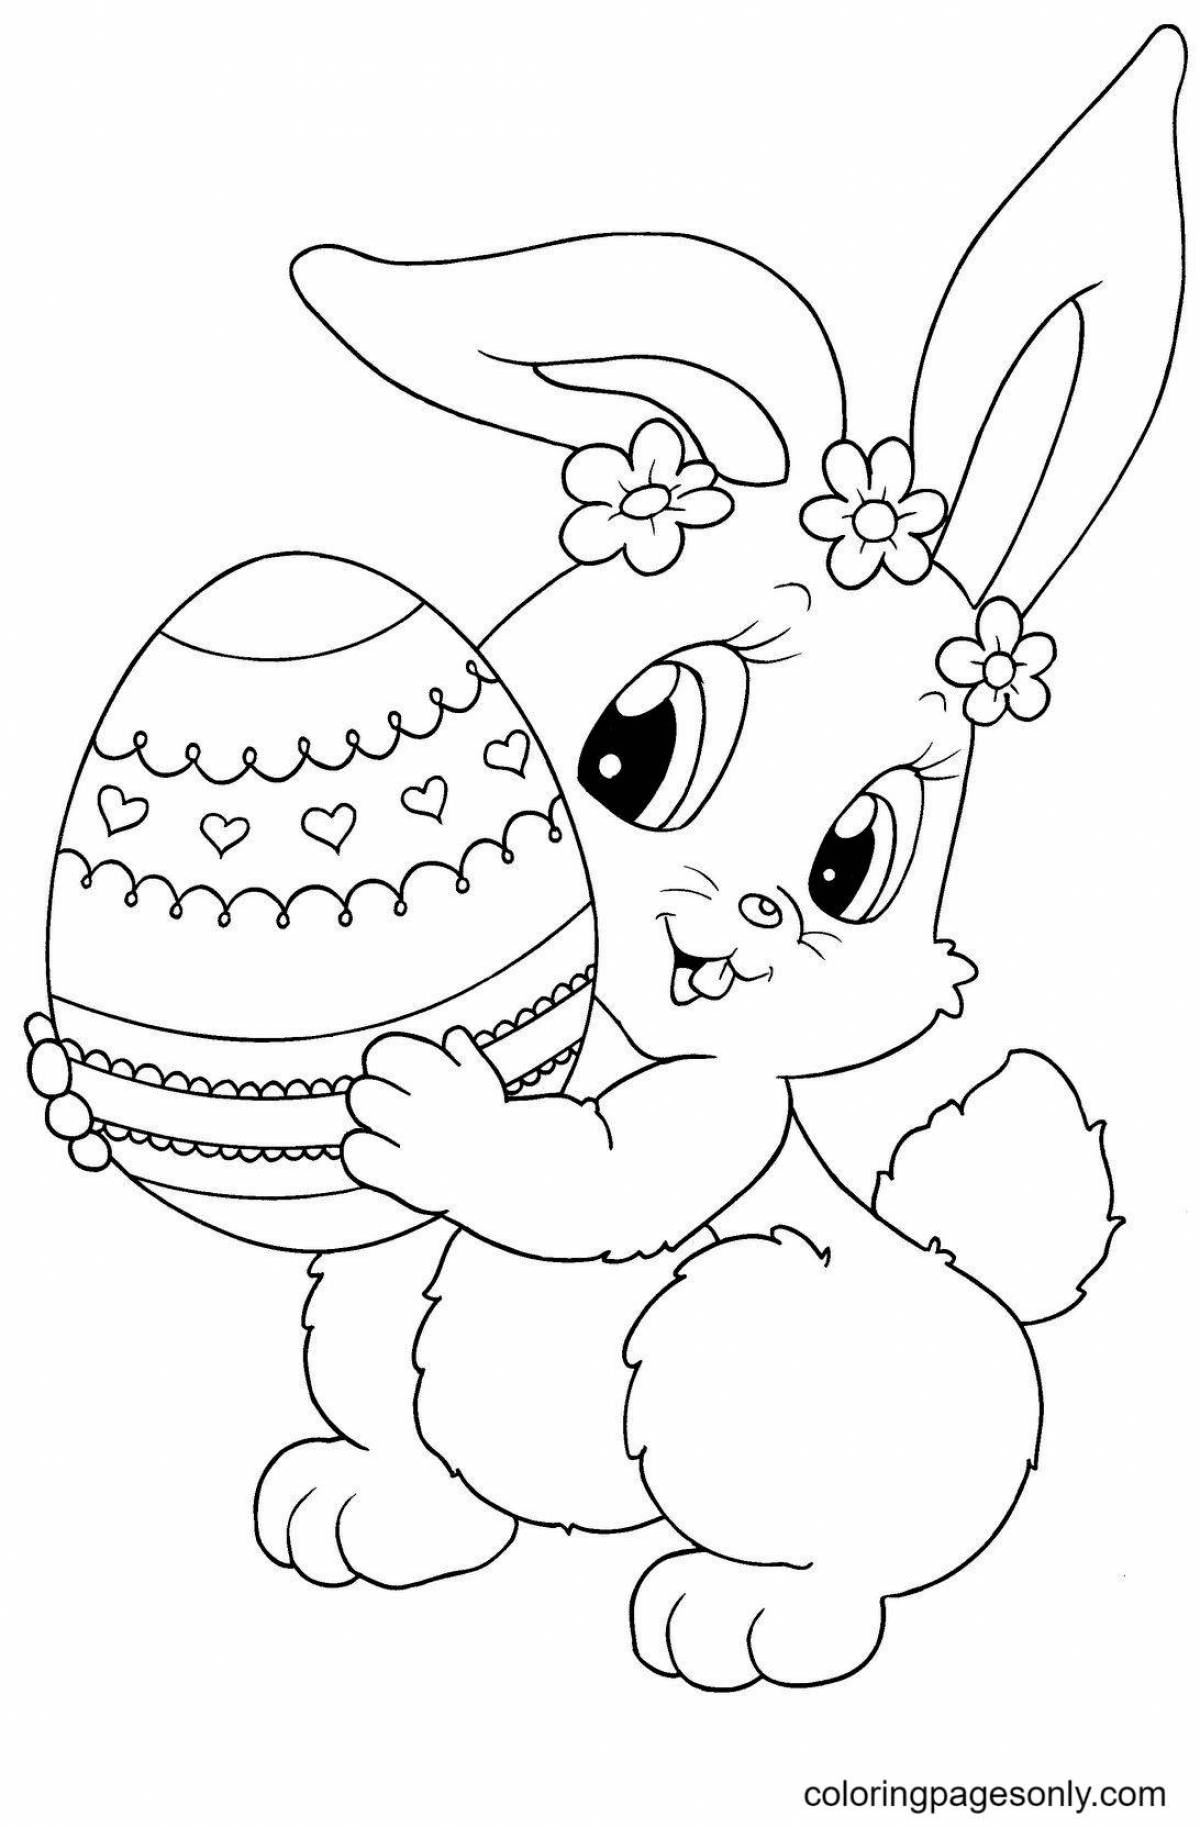 Naughty bunny coloring book